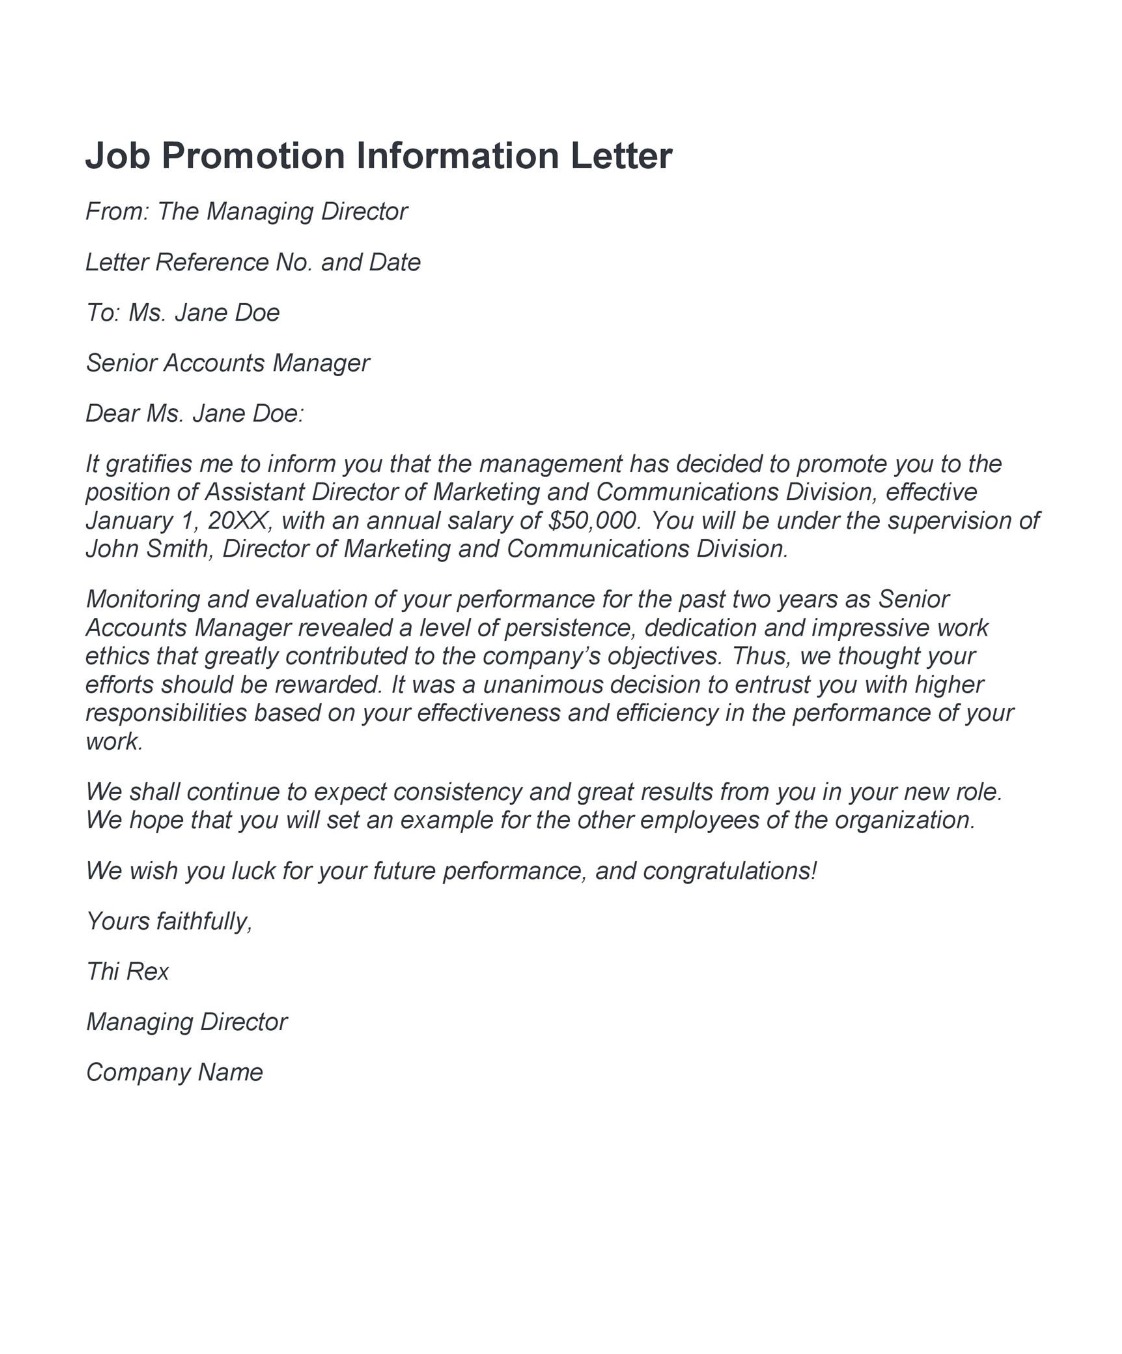 job promotion information letter template